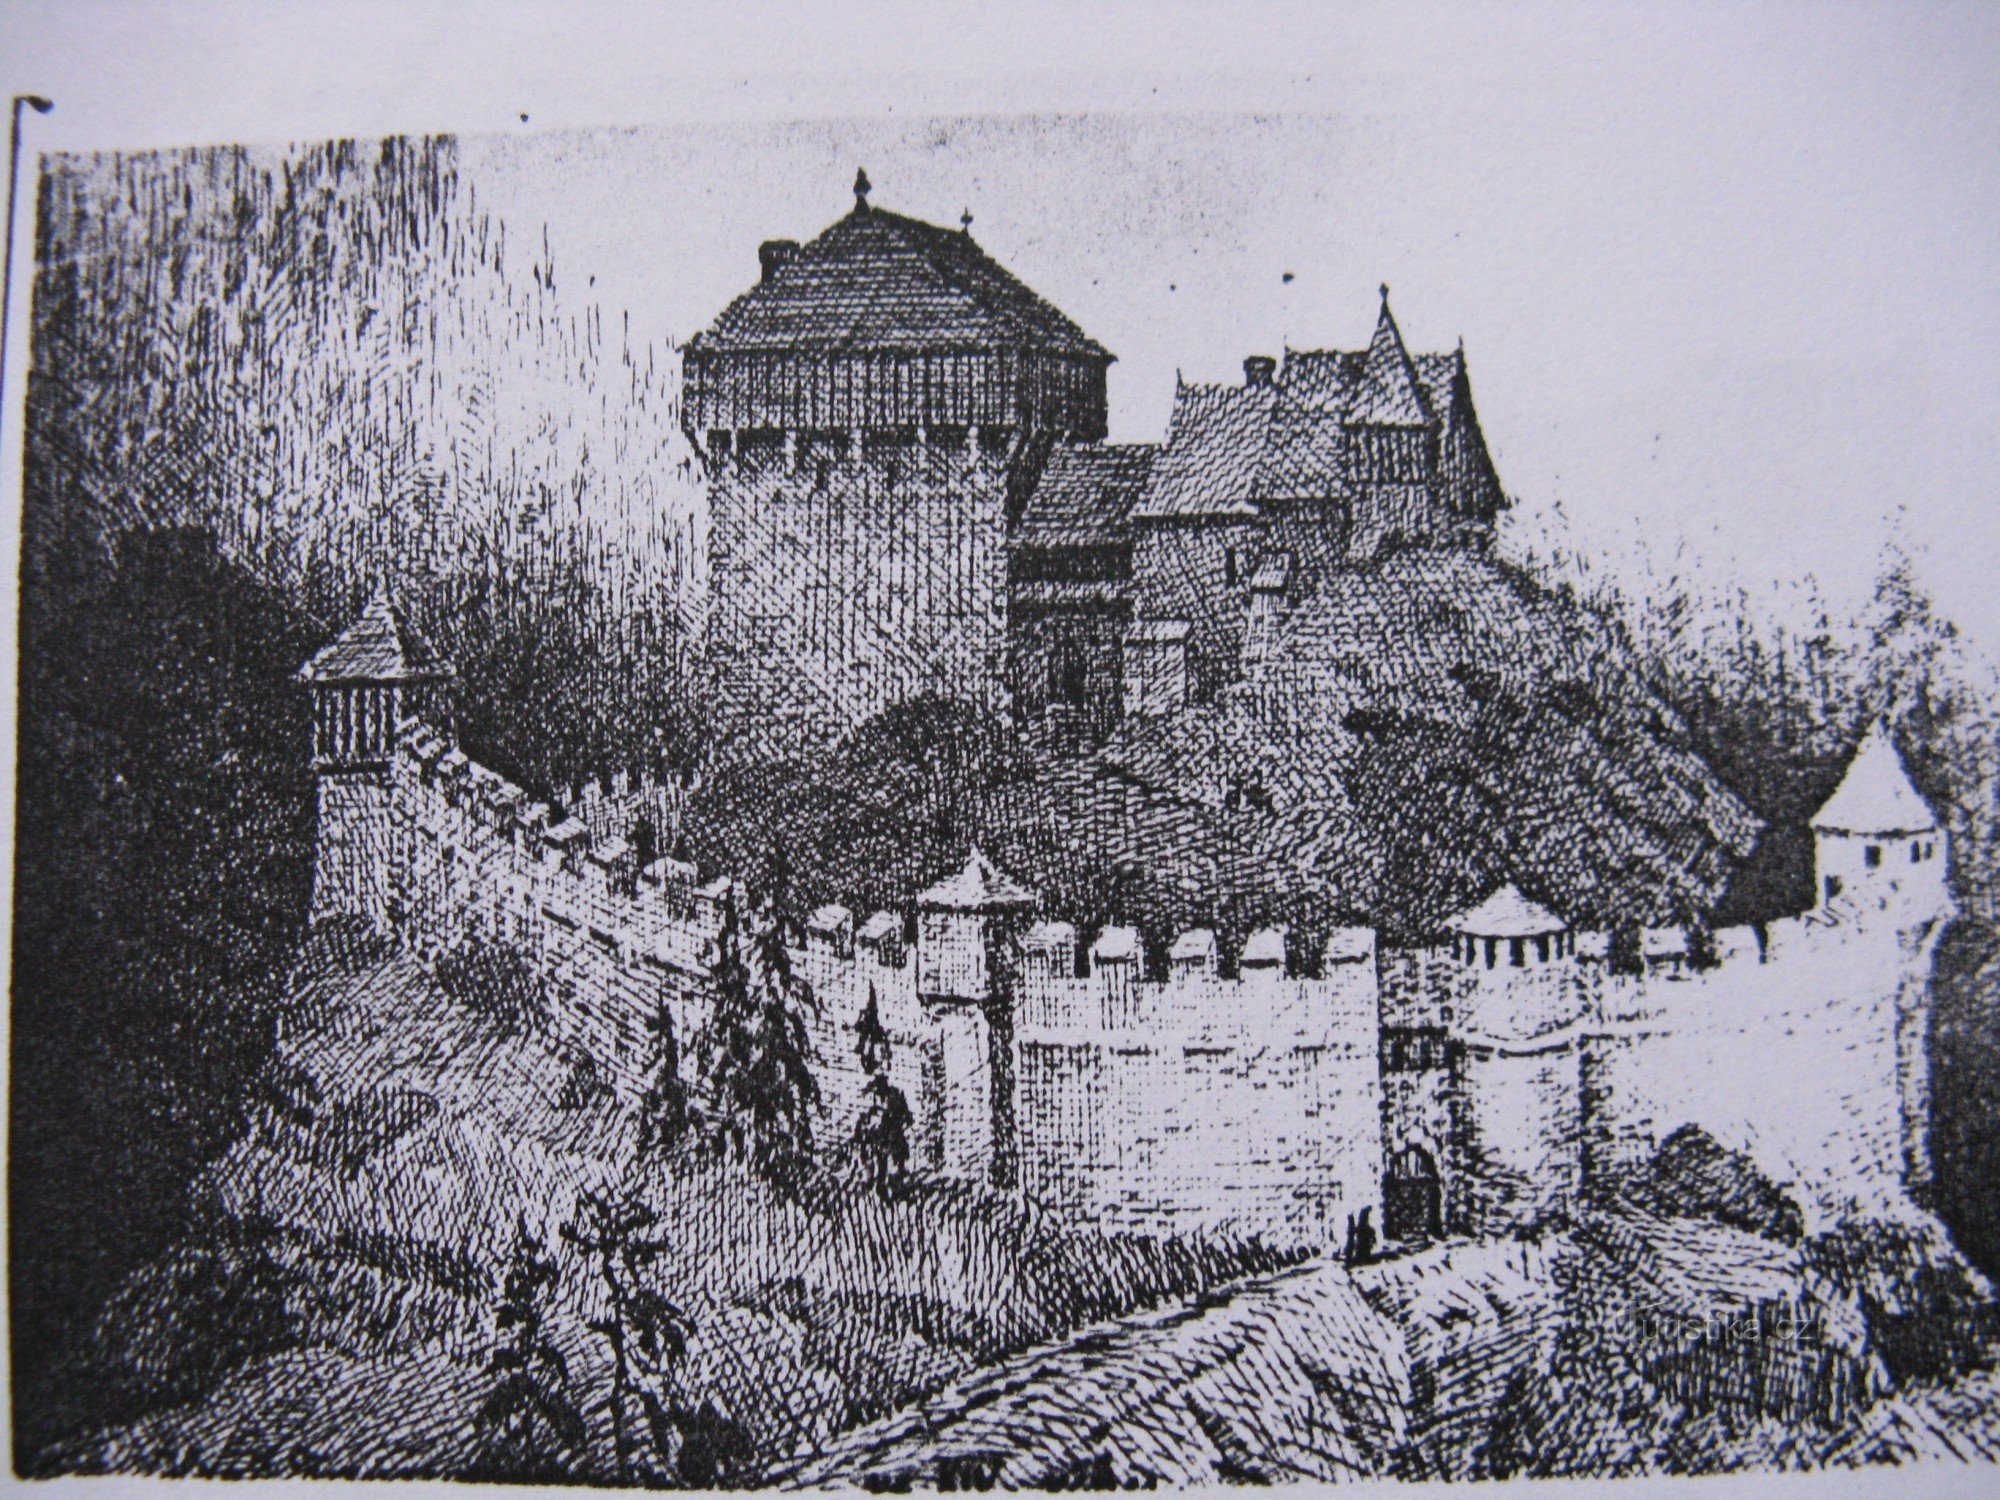 Návarov slott i sina glansdagar - gammalt vykort